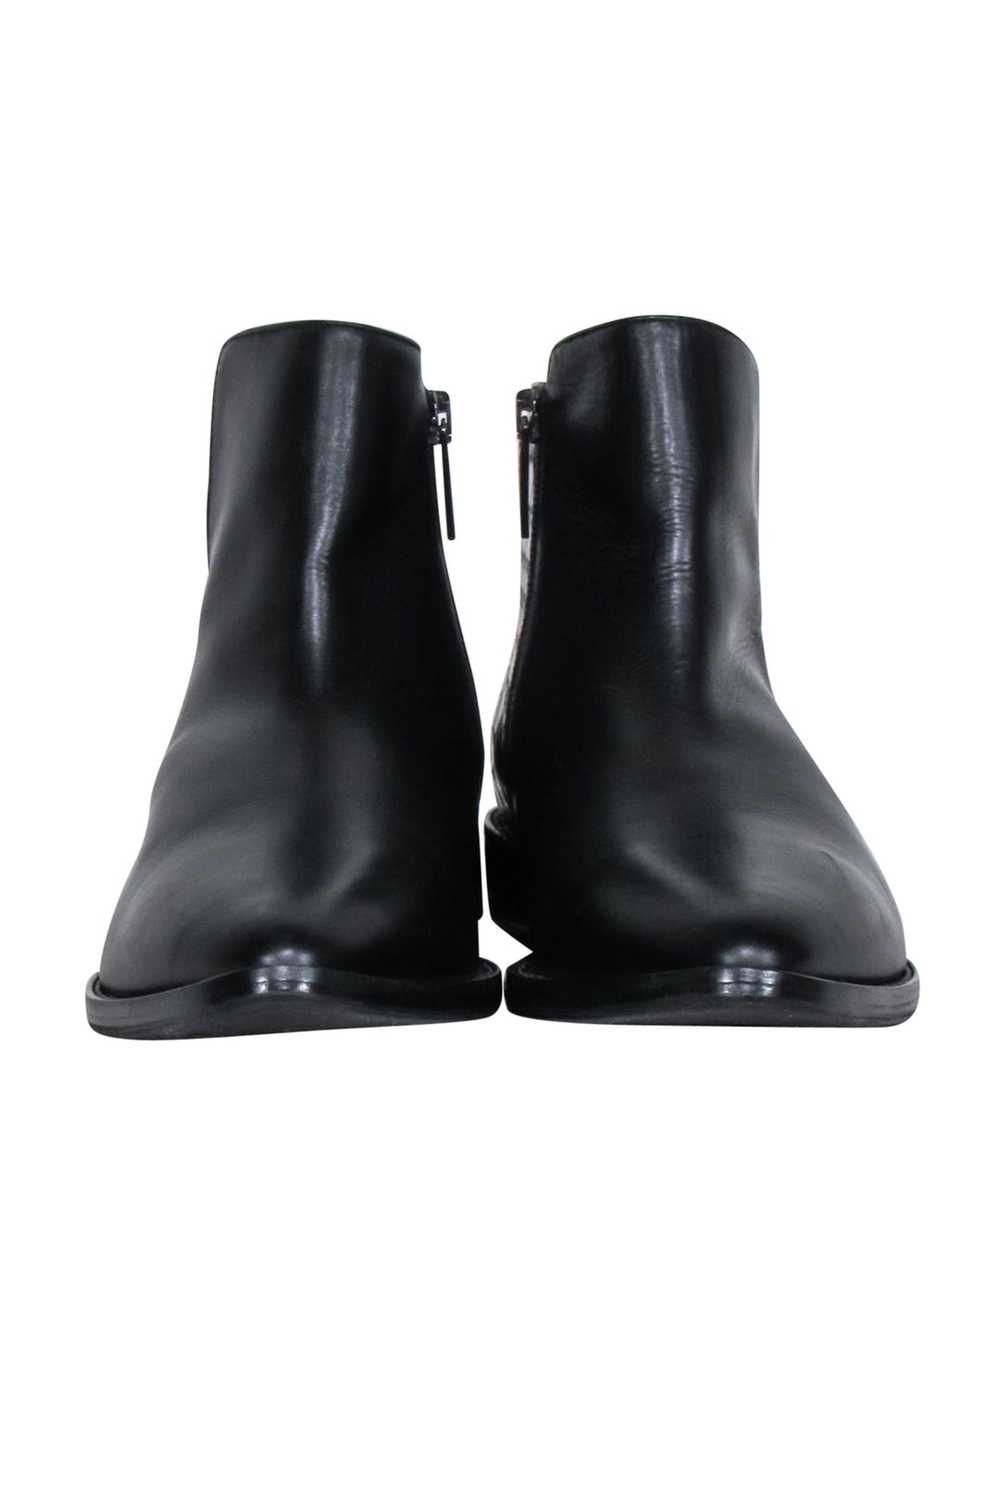 Aquatalia - Black Leather Pointed-Toe Short Boots… - image 2